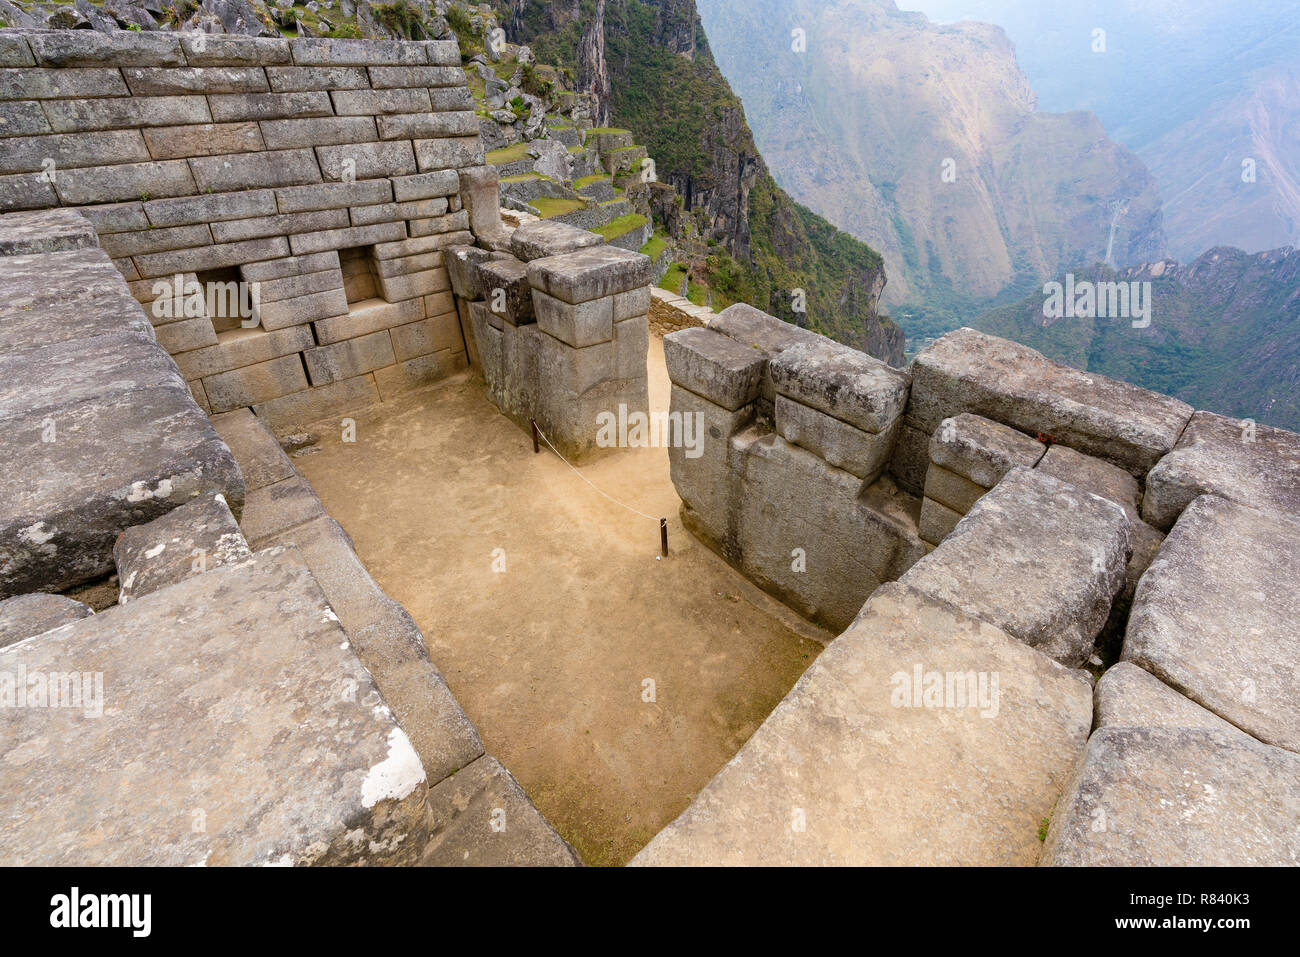 Ruin of an ancient house at Machu Picchu, Peru Stock Photo